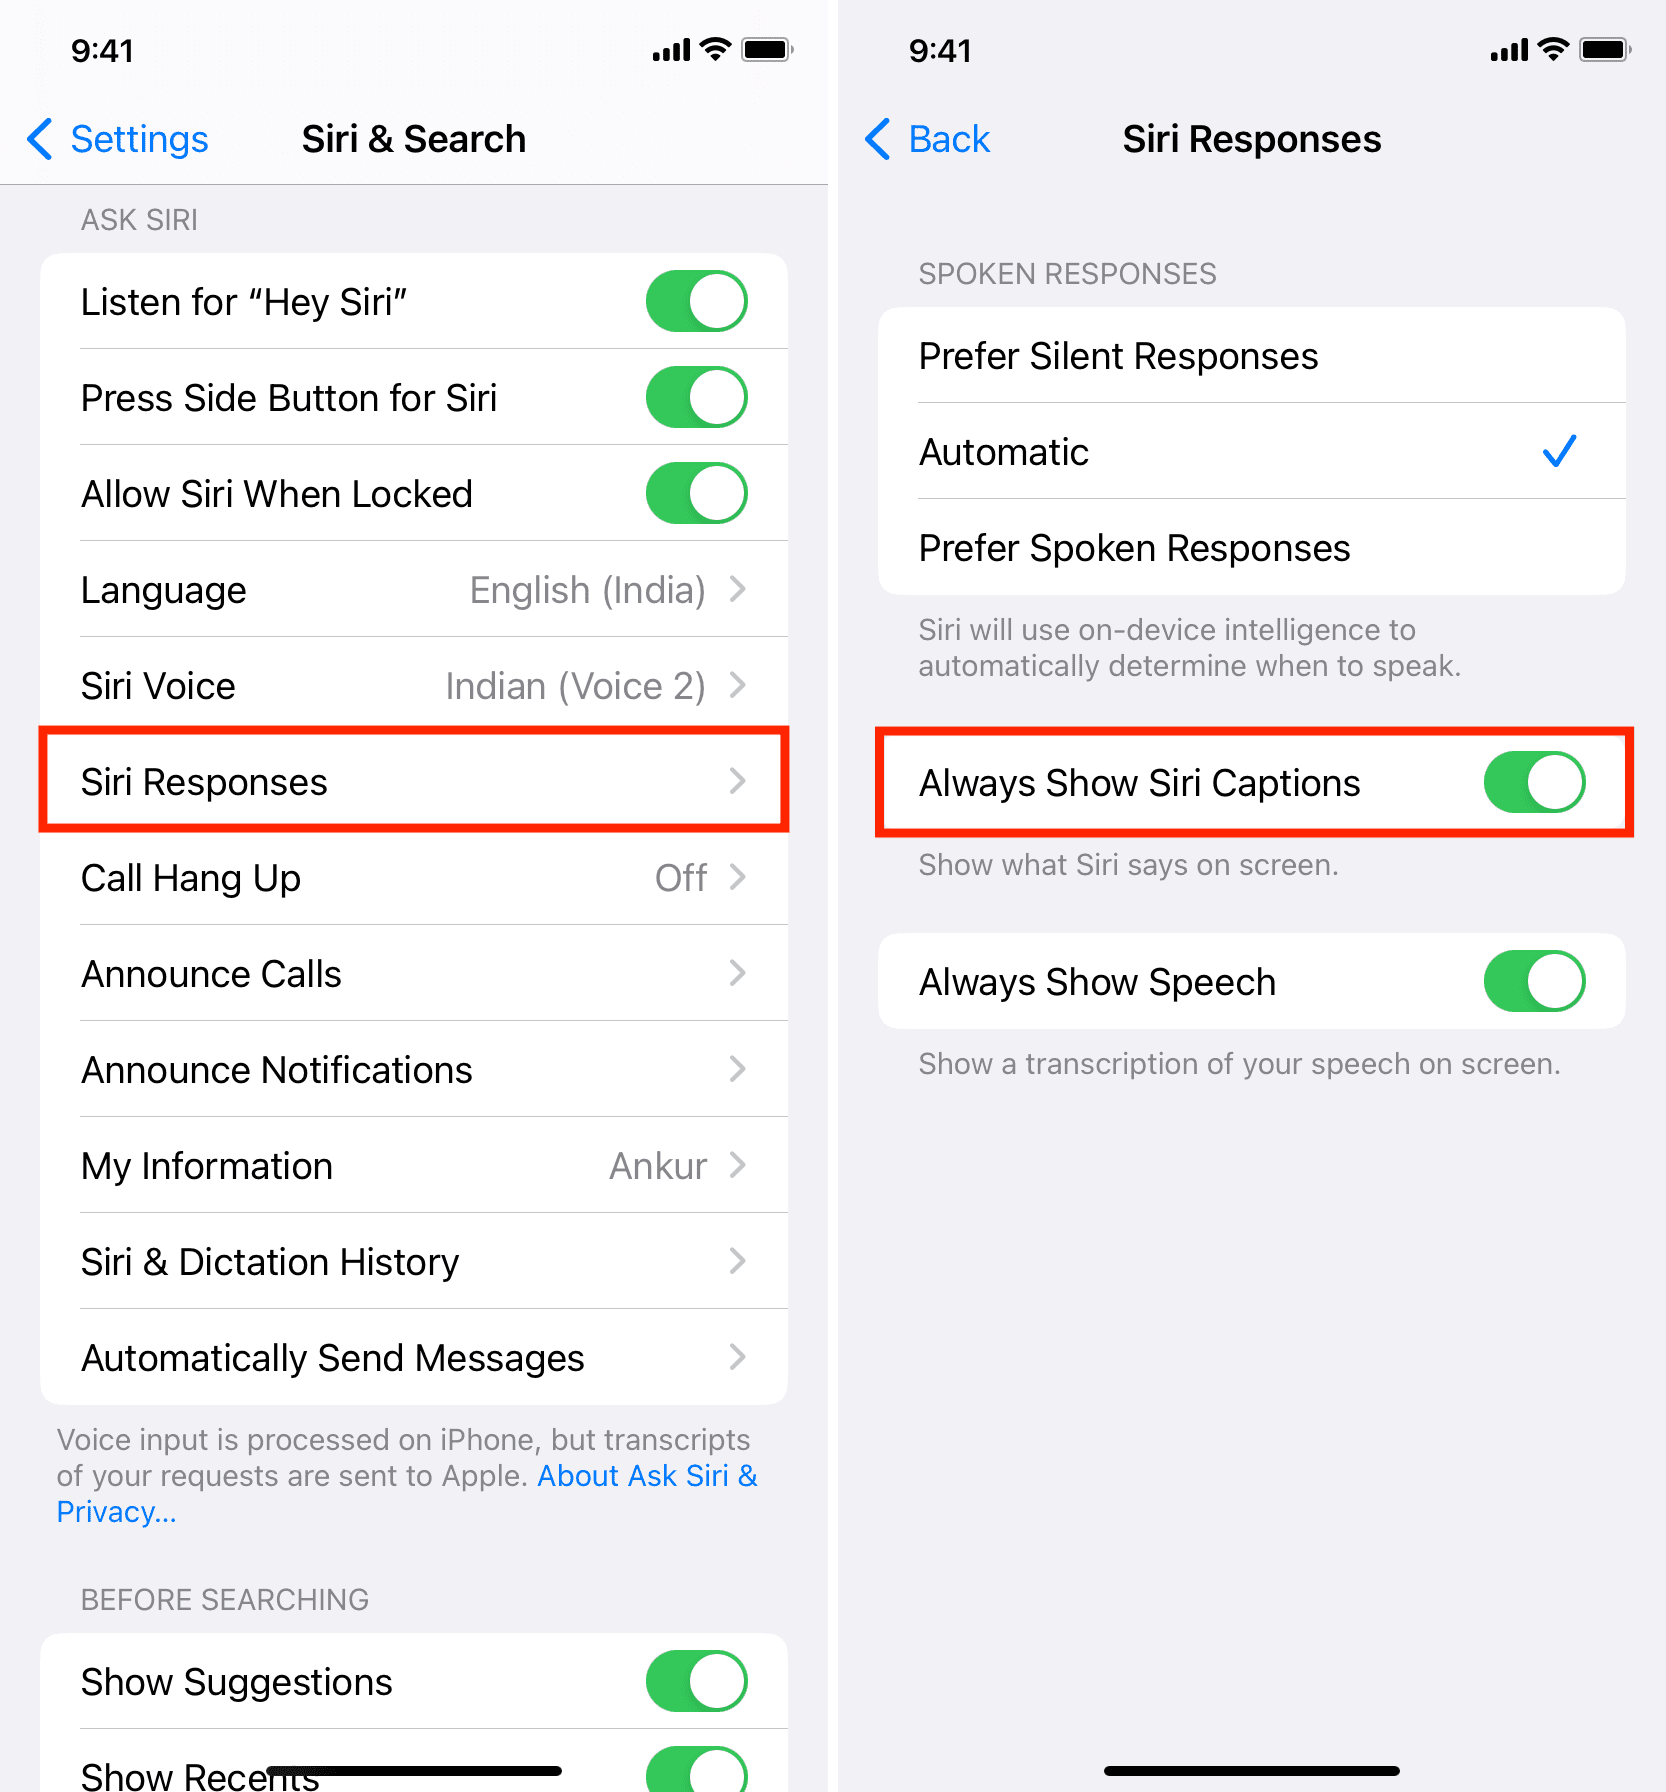 Enable Always Show Siri Captions in iPhone Siri settings to see what Siri speaks on your iPhone or iPad screen